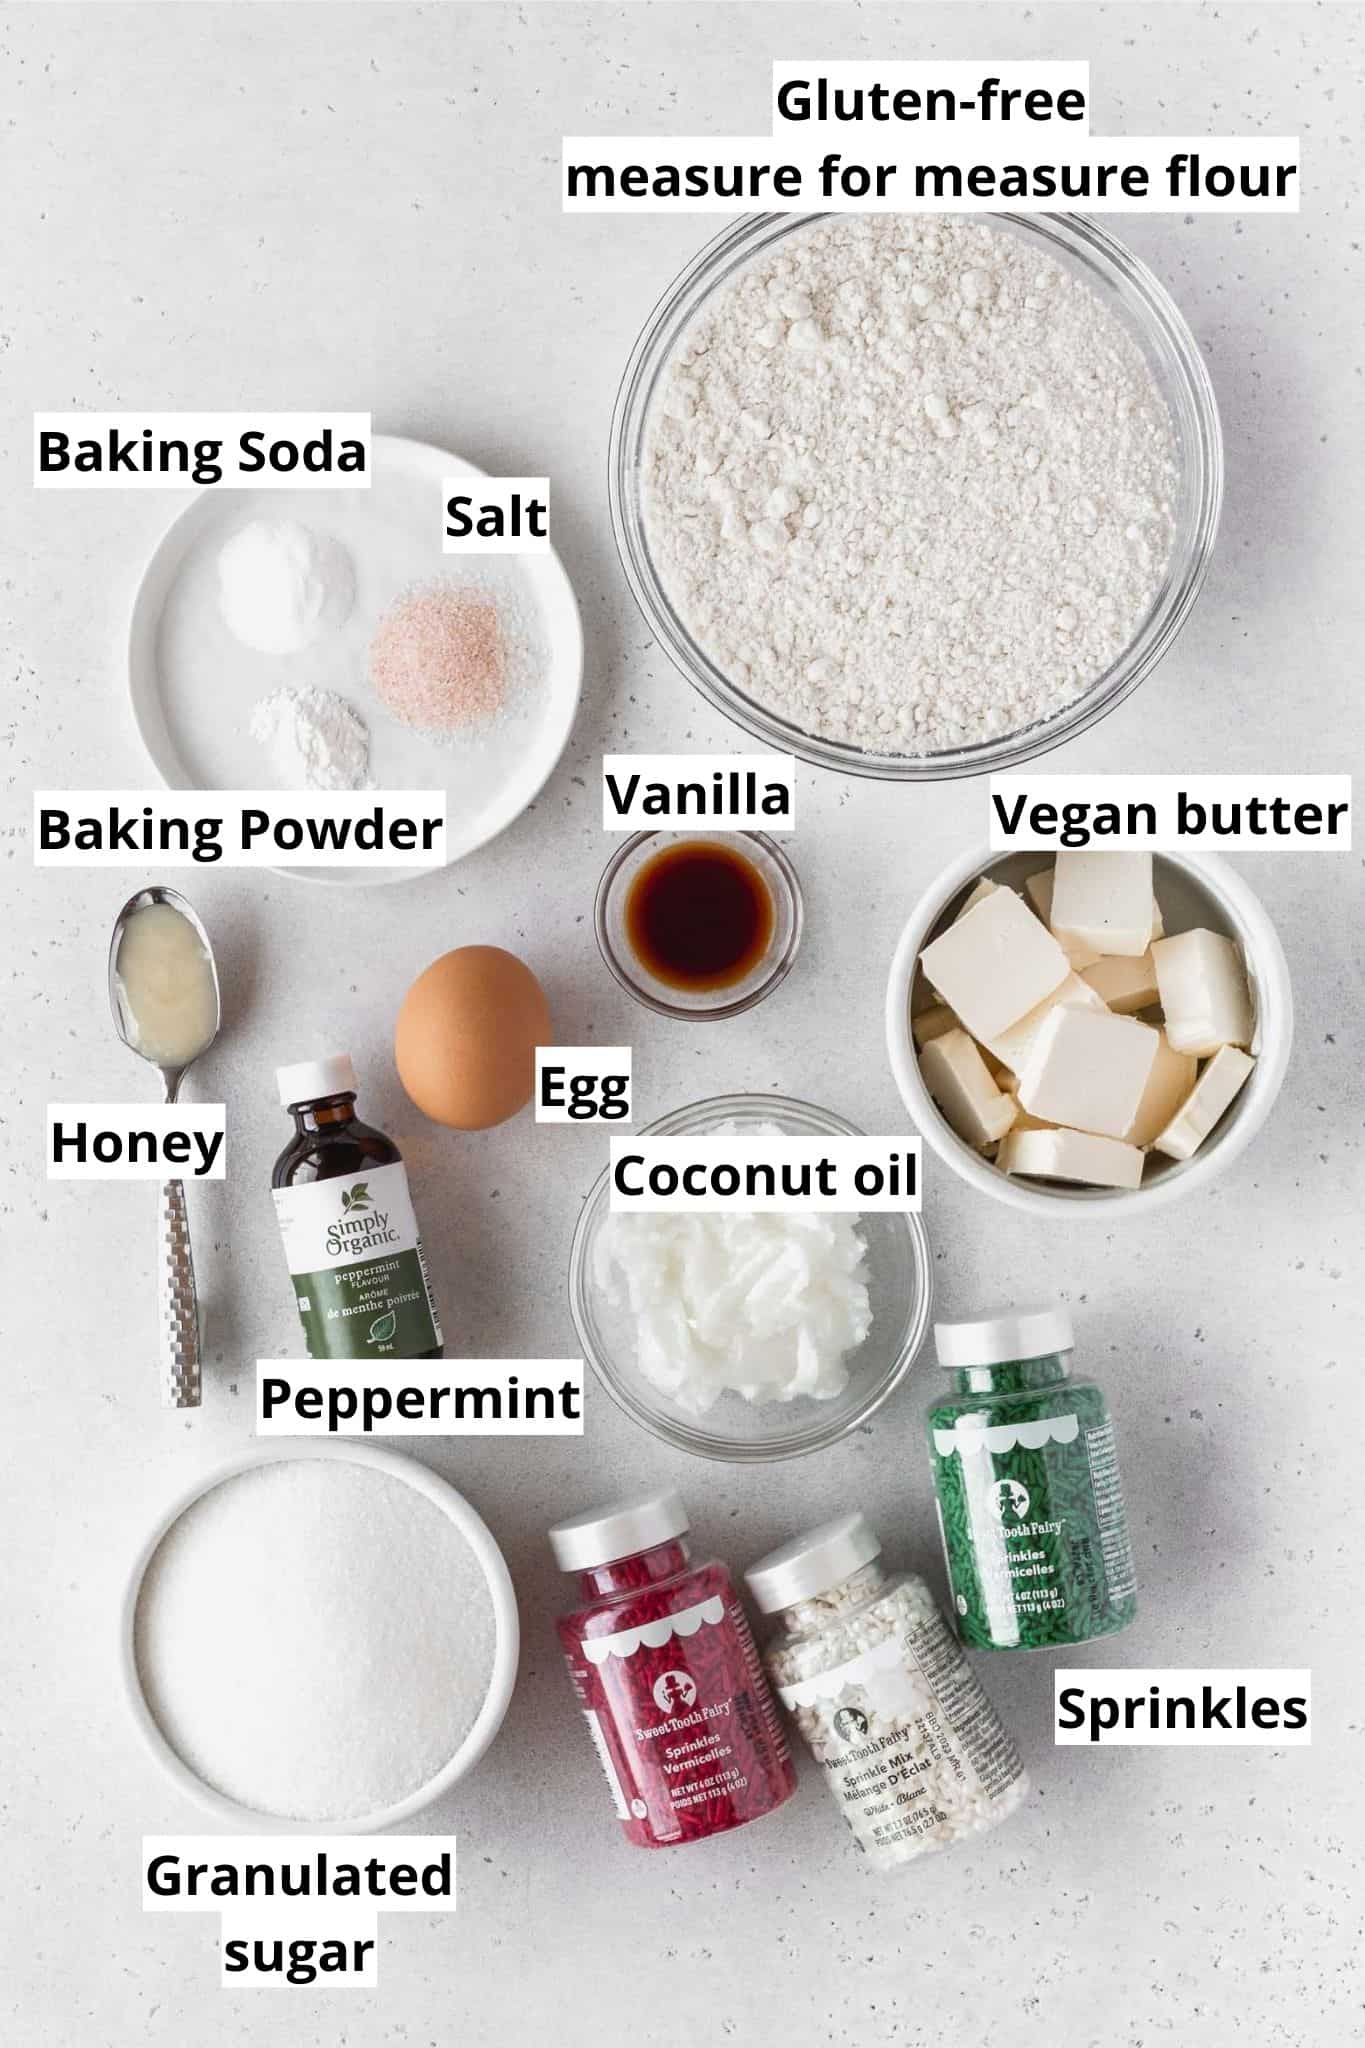 Ingredients to make gluten-free Christmas cookies.